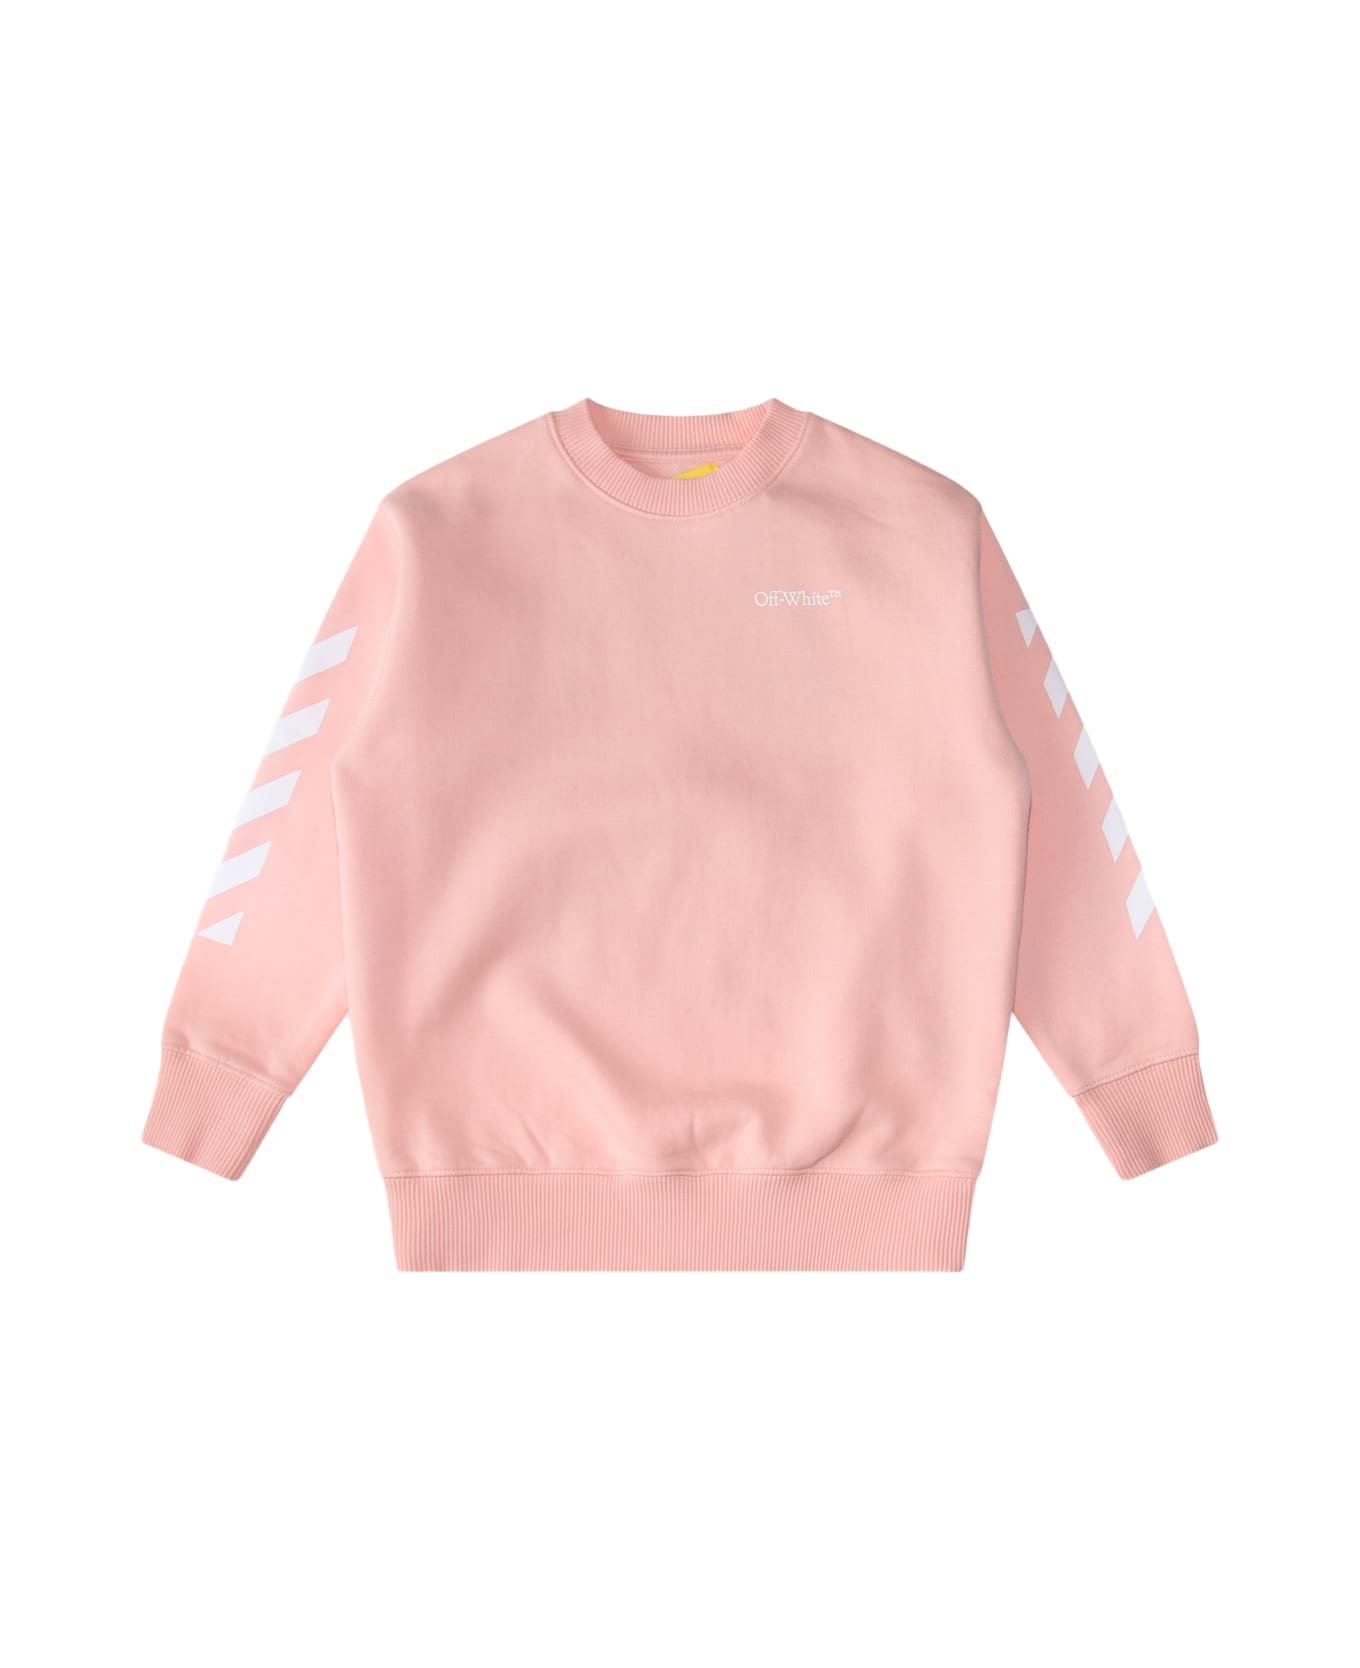 Off-White Pink Cotton Sweatshirt - Pink